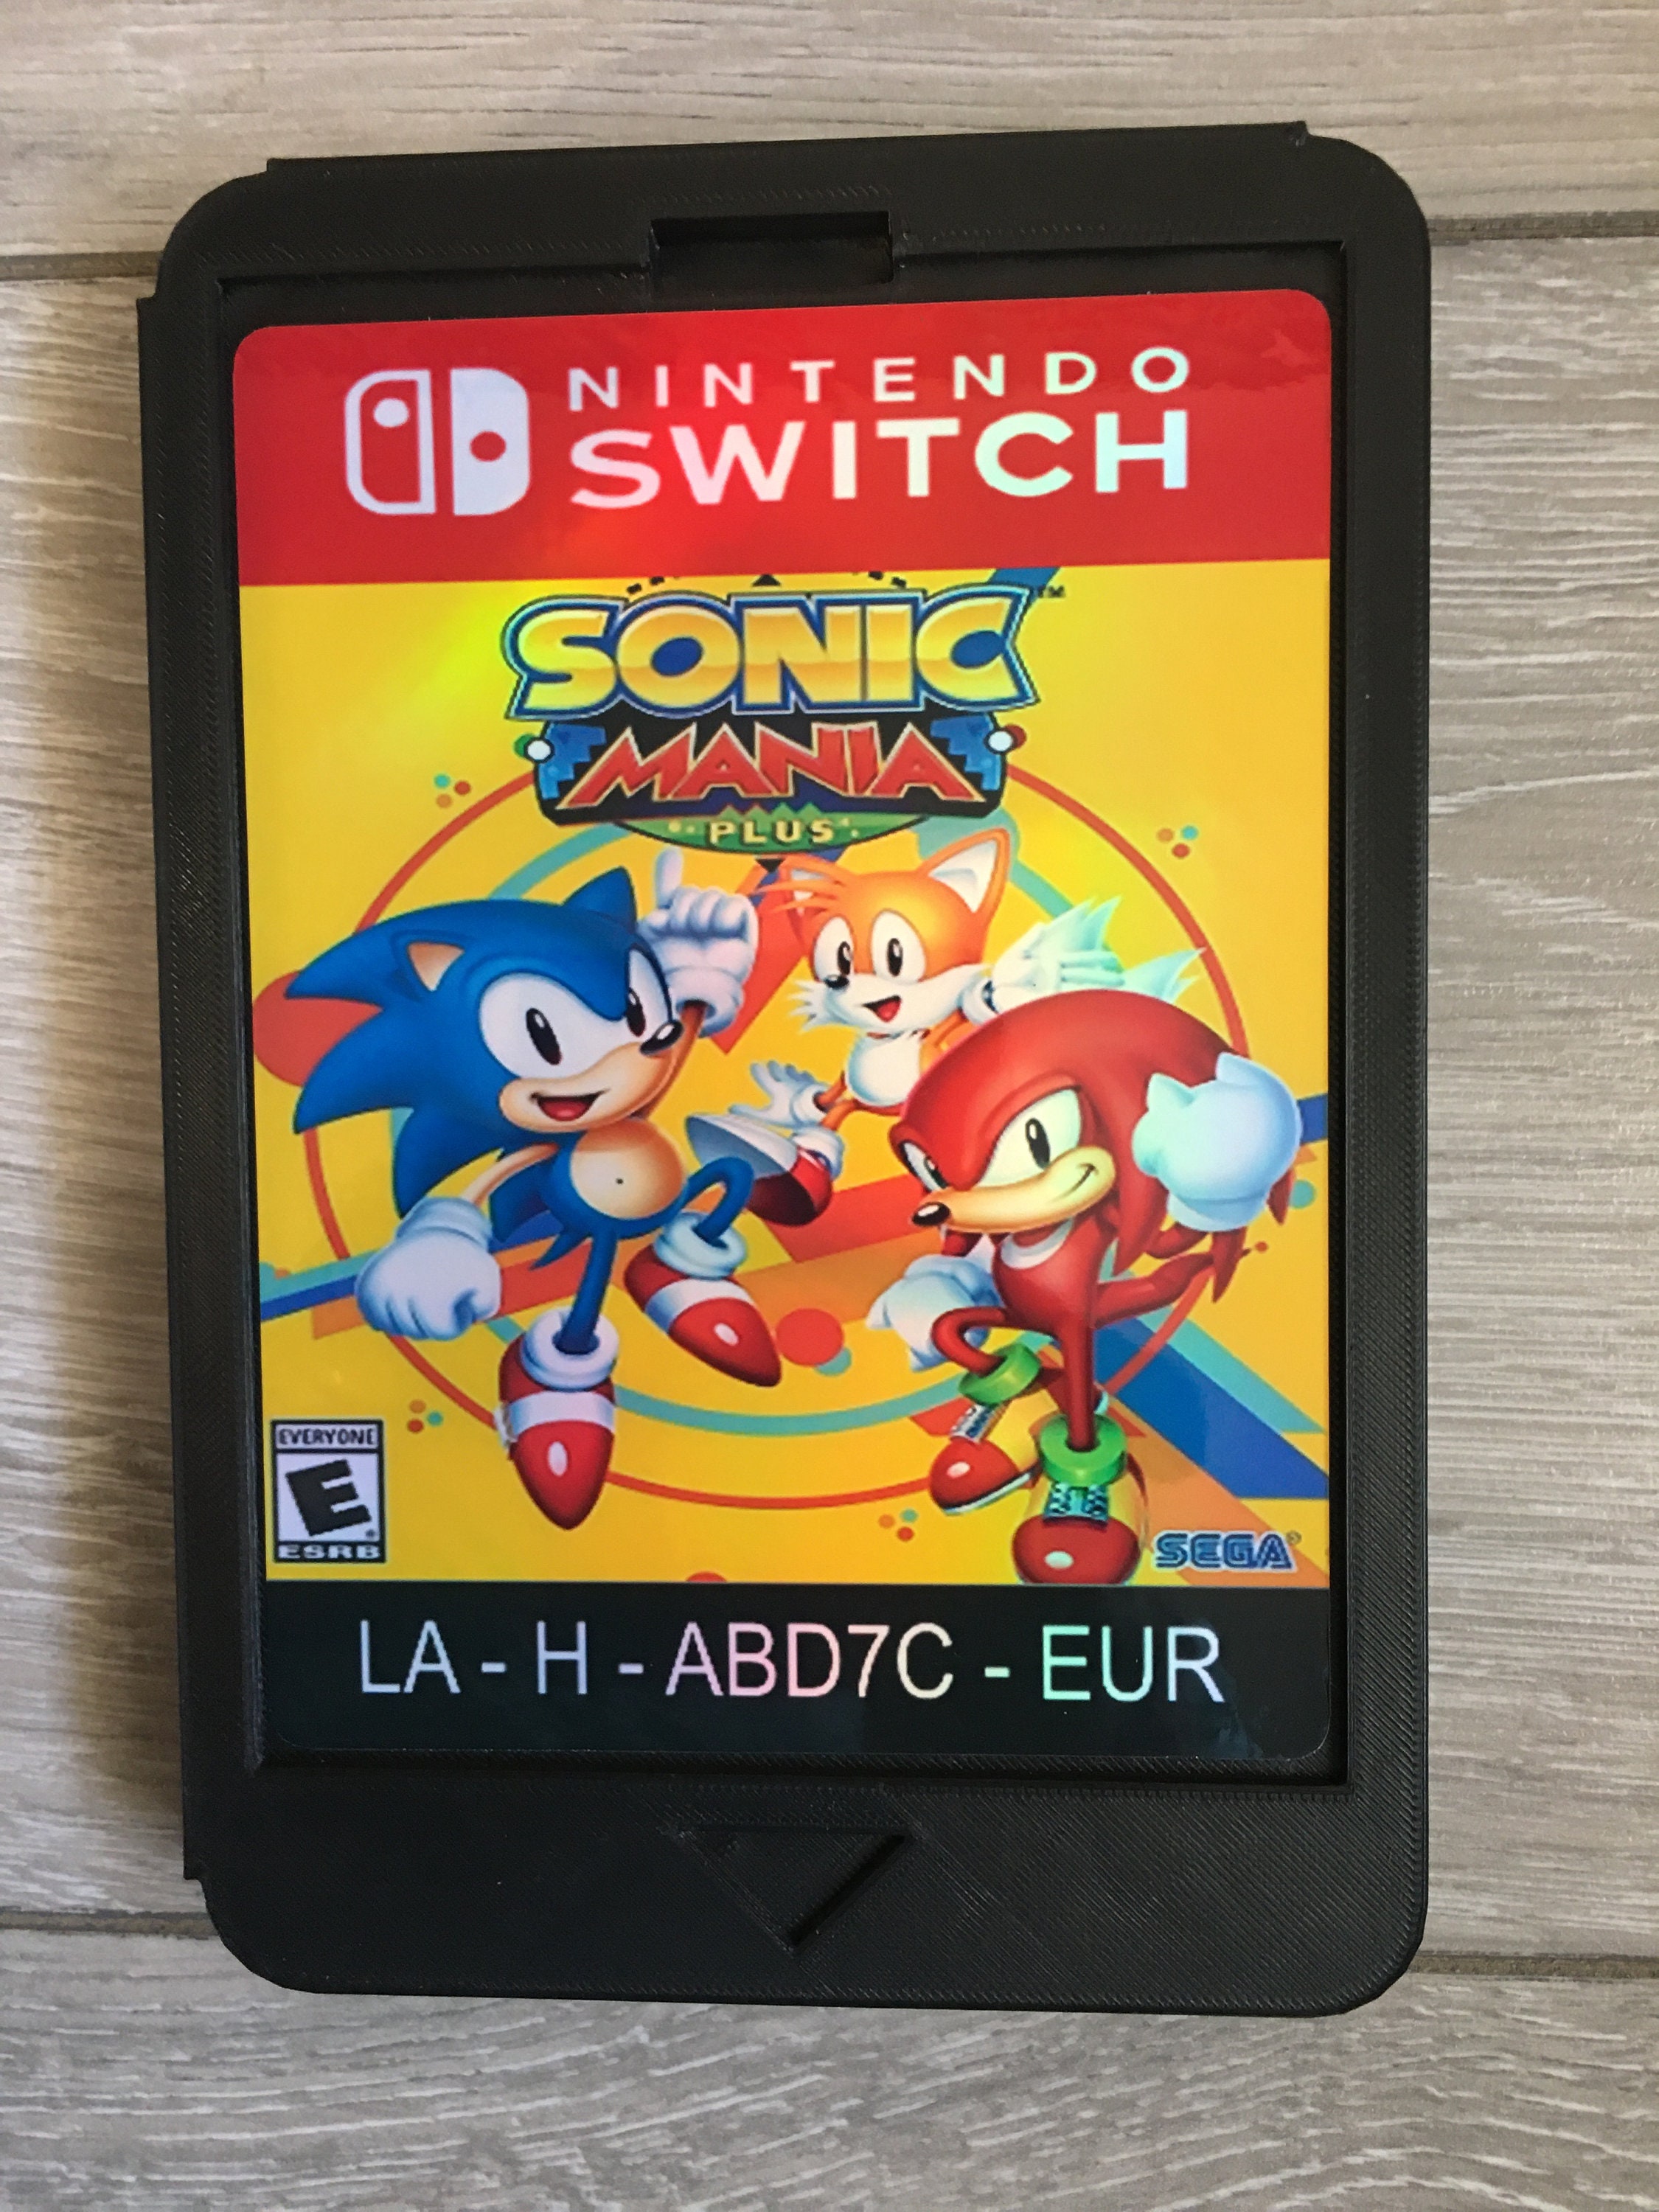 Sonic Mania Plus (Nintendo Switch)